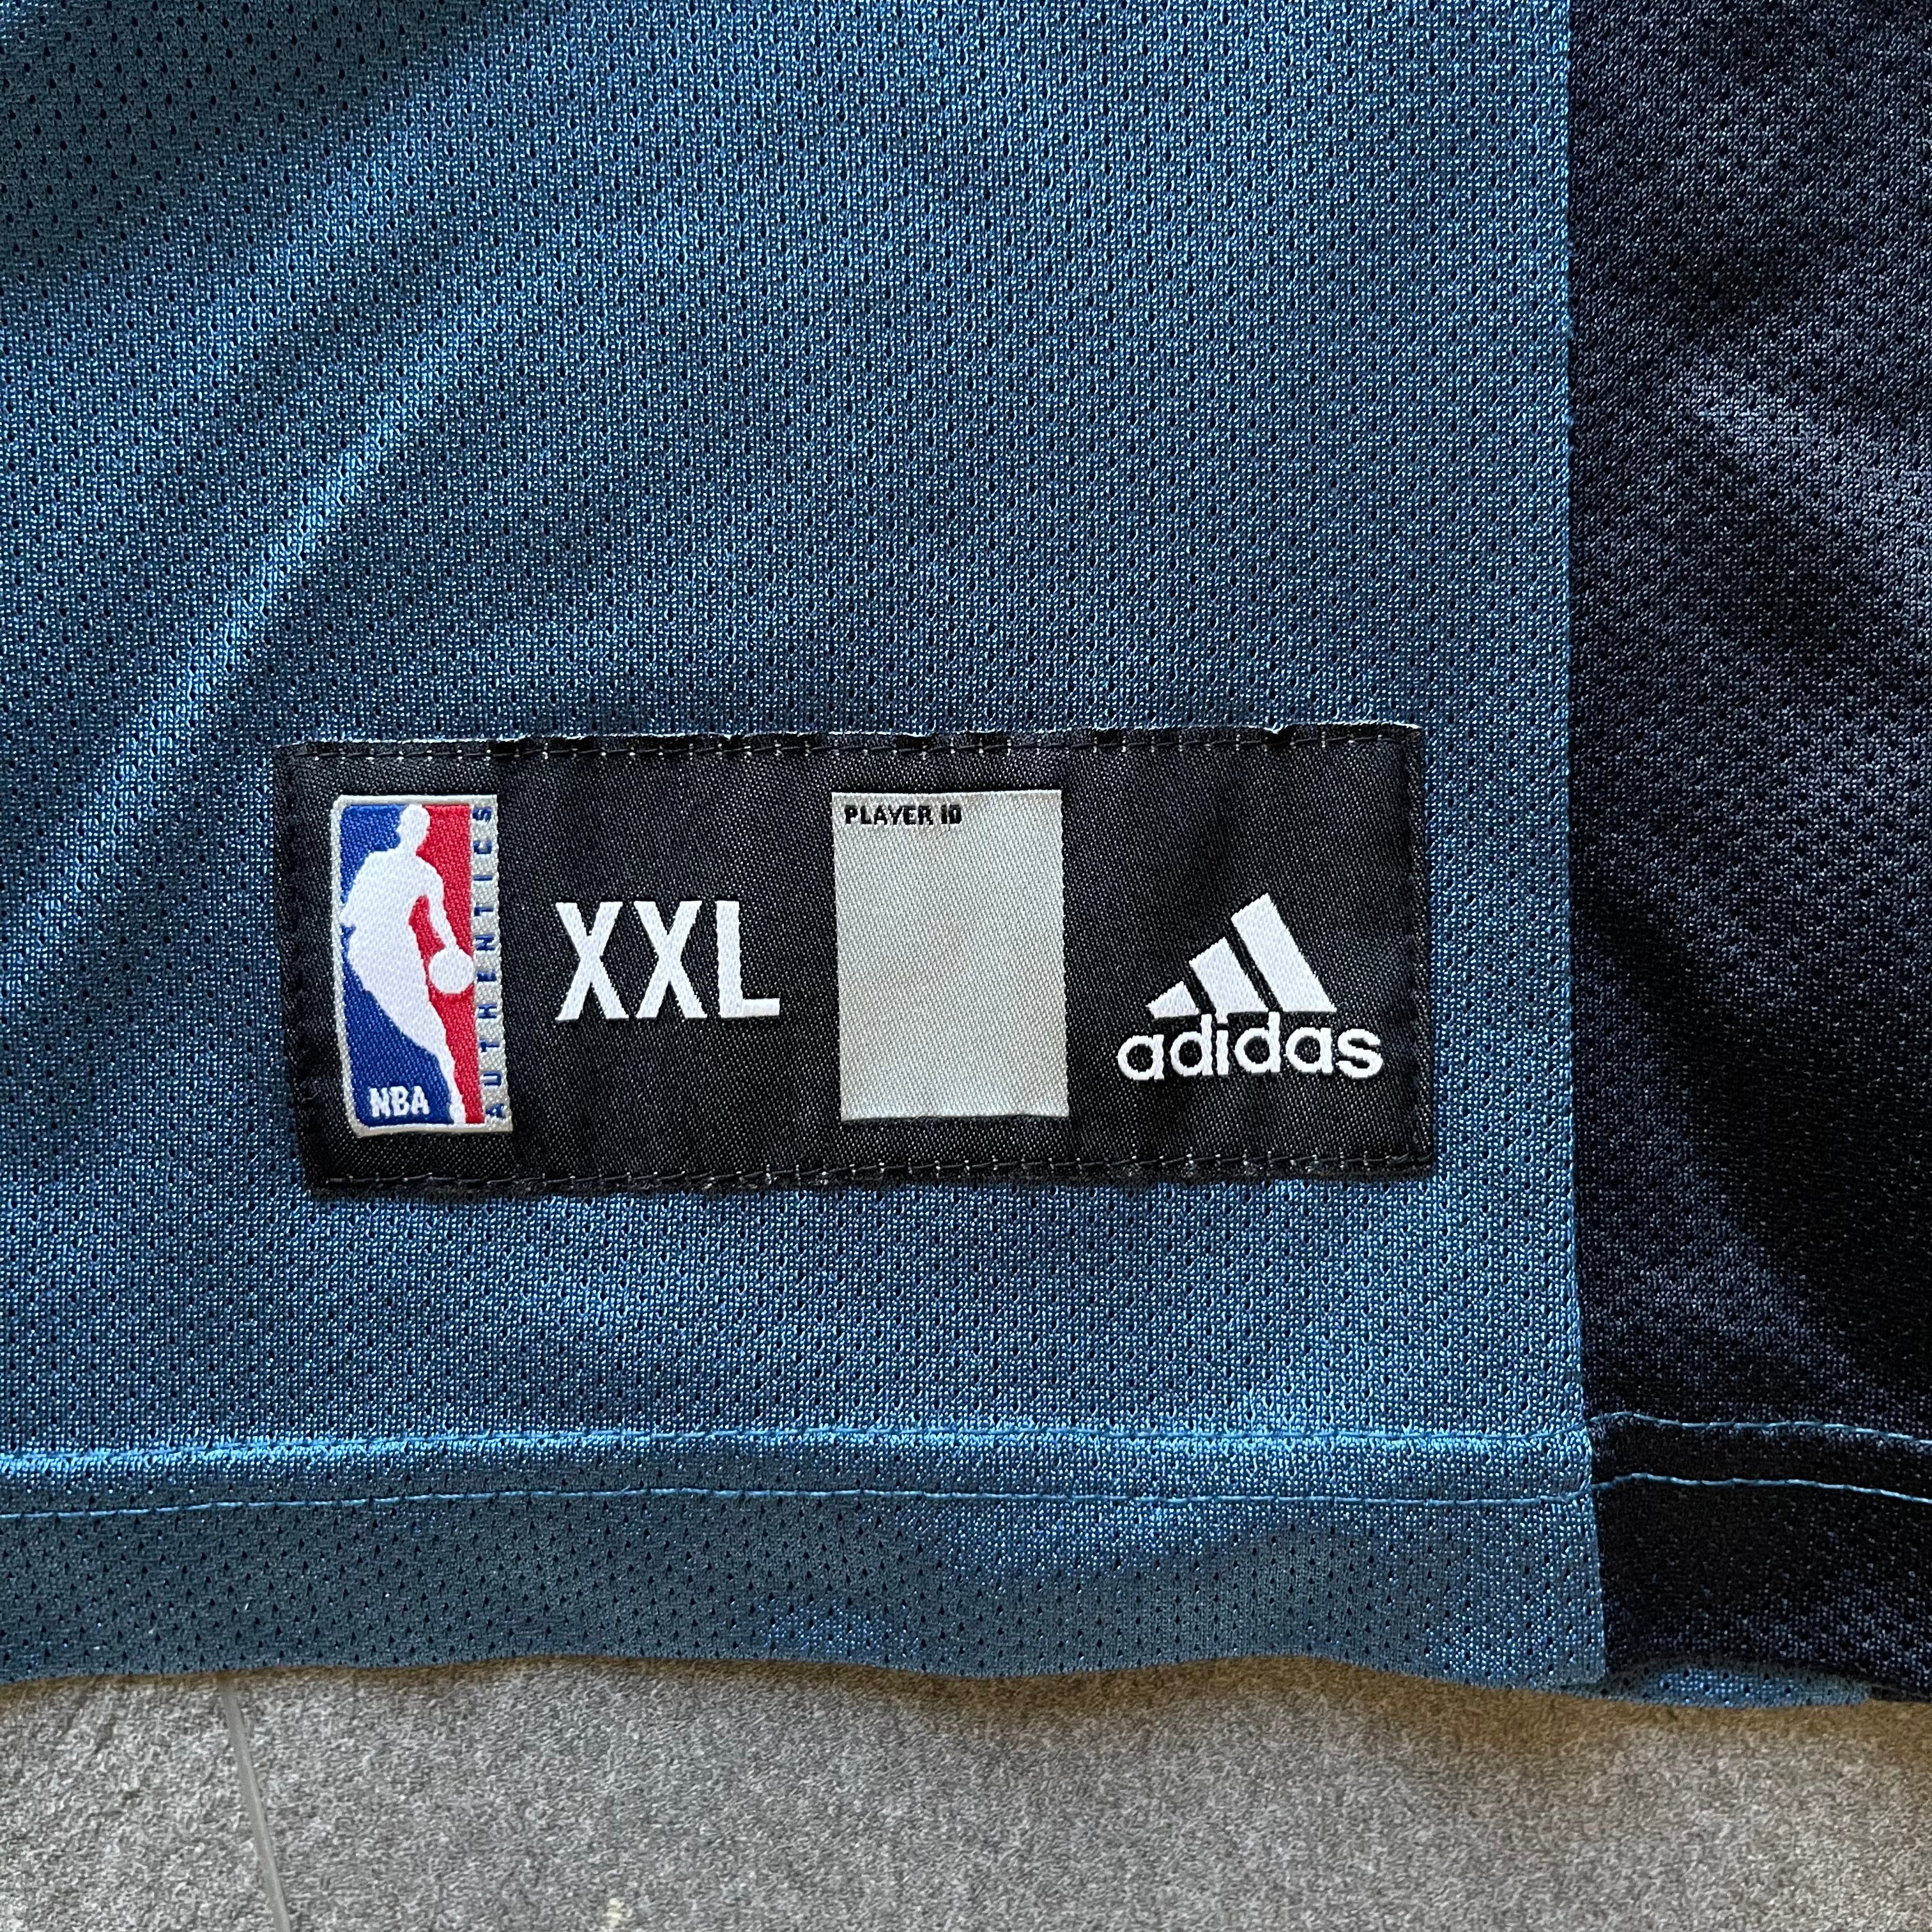 Vintage NBA Adidas Wizards Basketball Jersey (Size XXL)